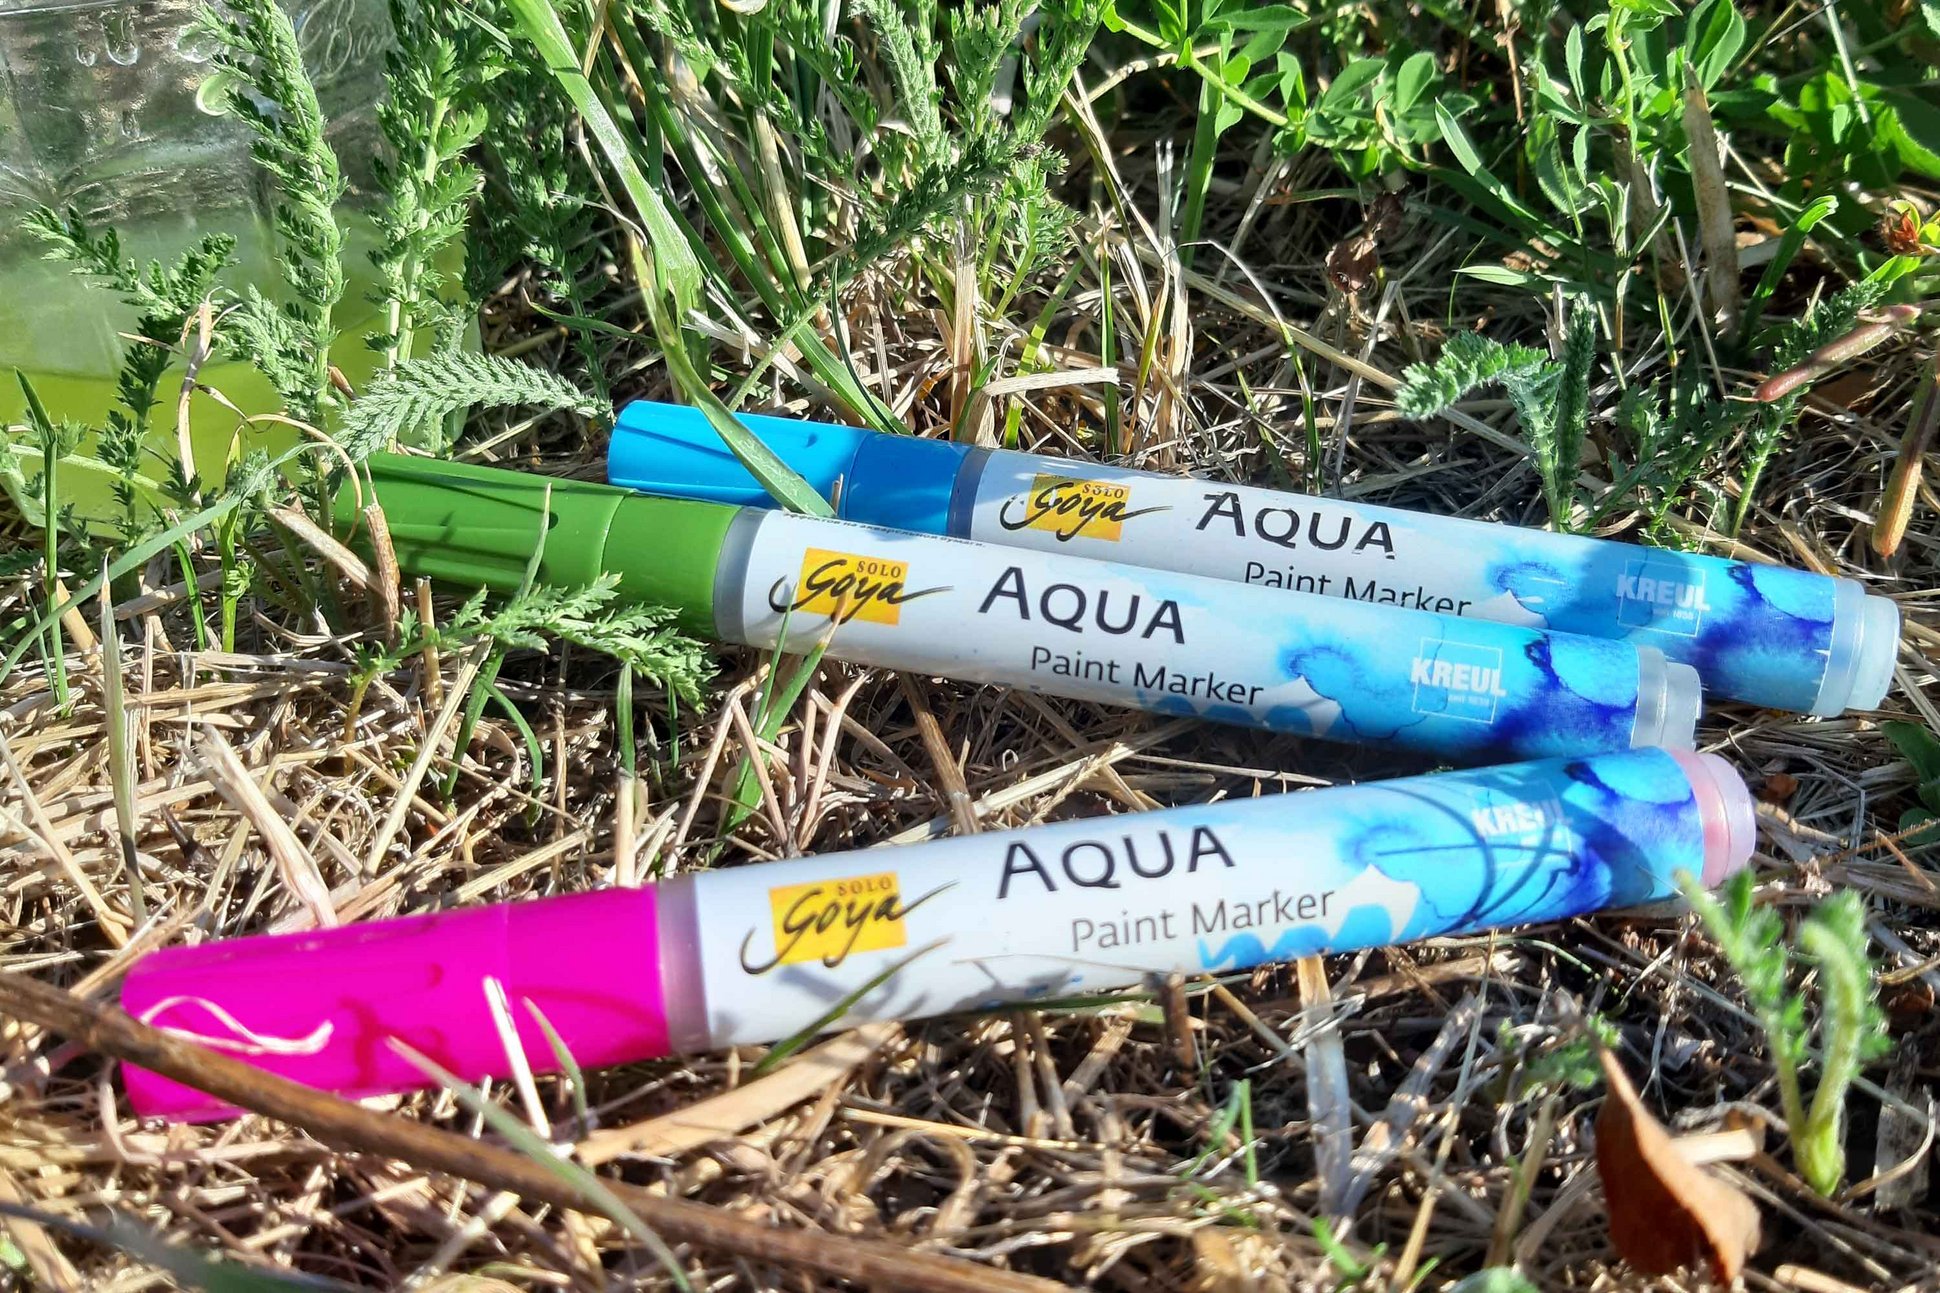 SOLO GOYA Aqua Paint Marker im Gras 